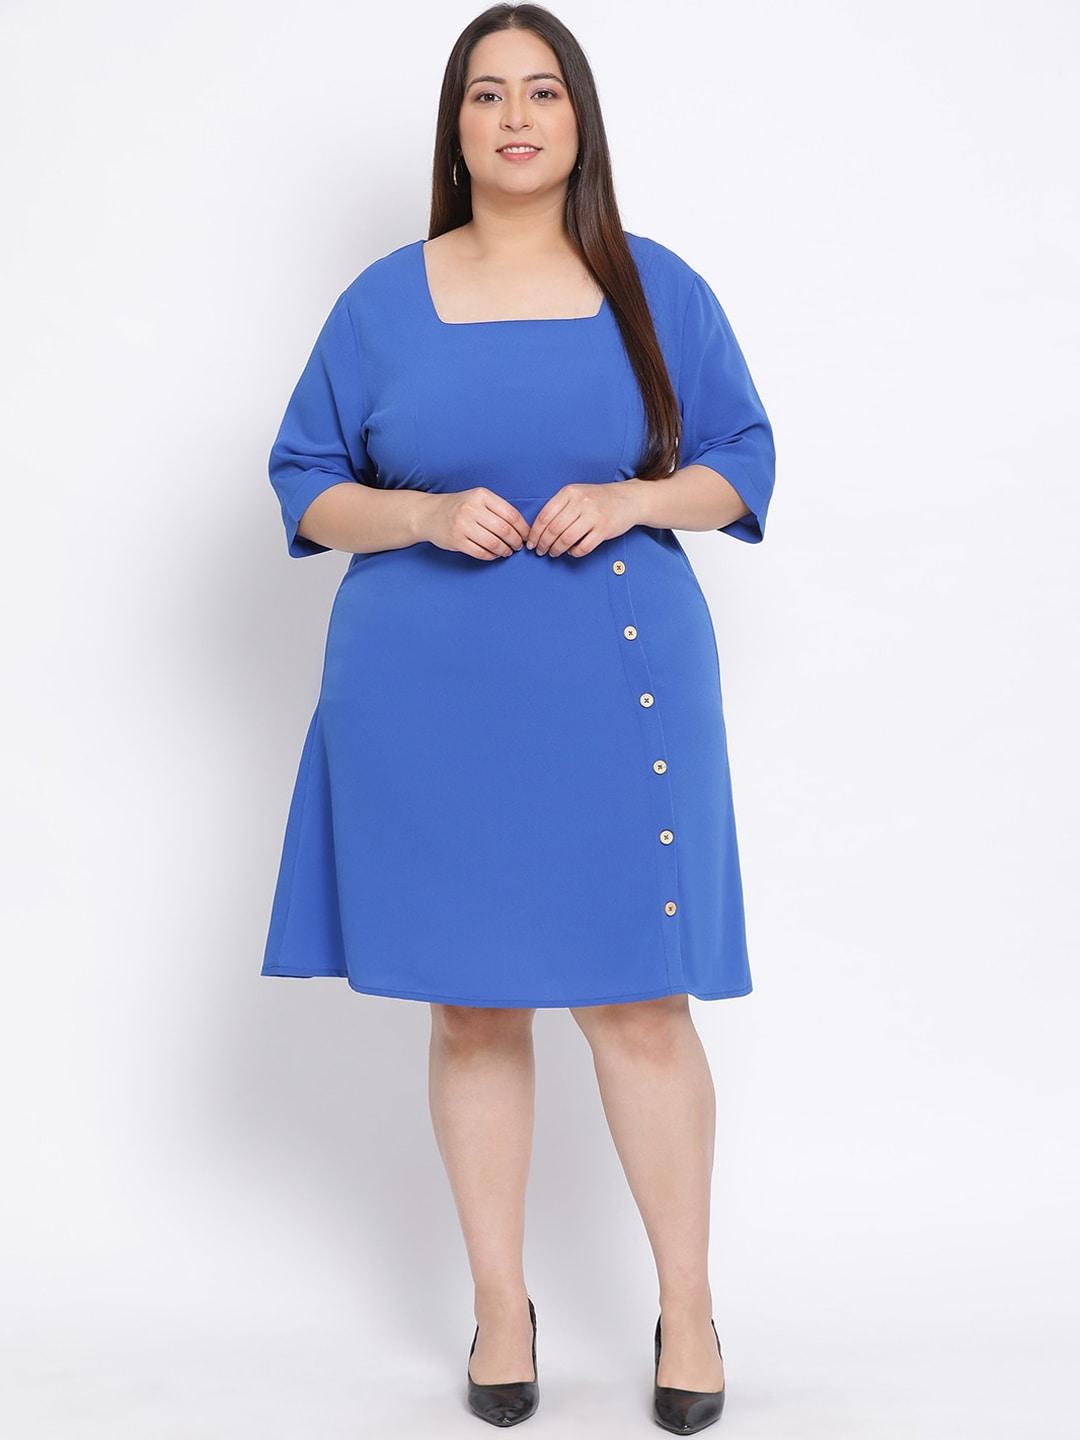 oxolloxo women plus size blue solid a-line dress